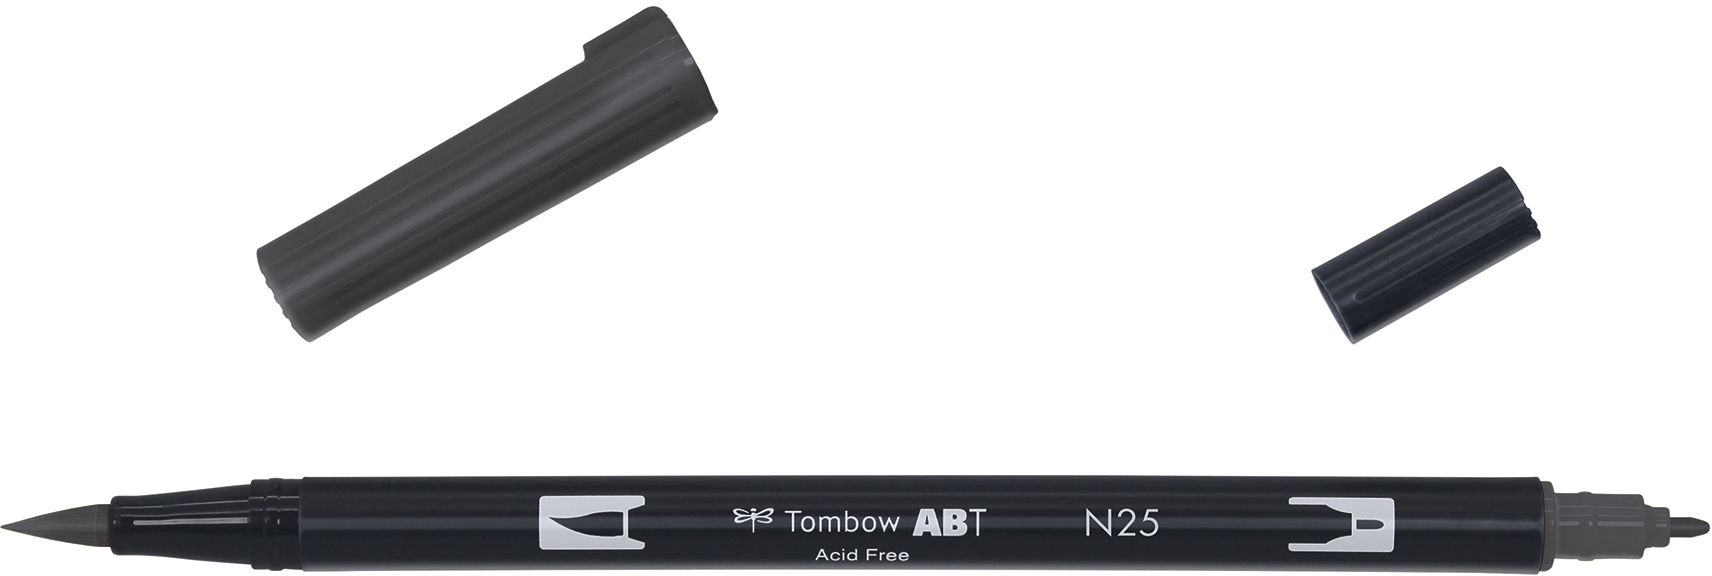 TOMBOW Dual Brush Pen ABT N25 lamp black lamp black